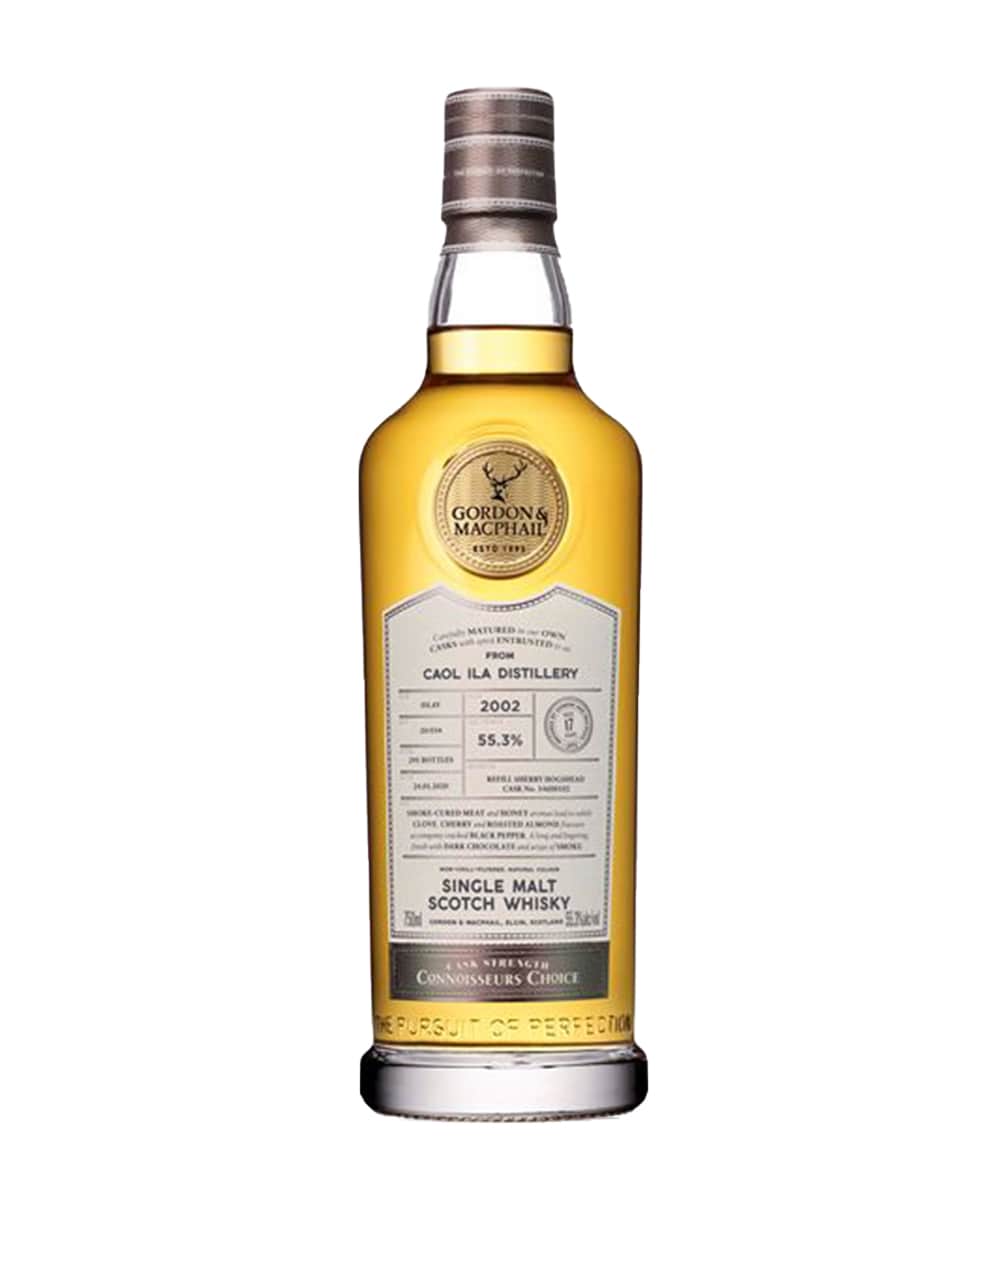 Caol Ila 12 Year Old Single Malt Scotch Whisky 750mL